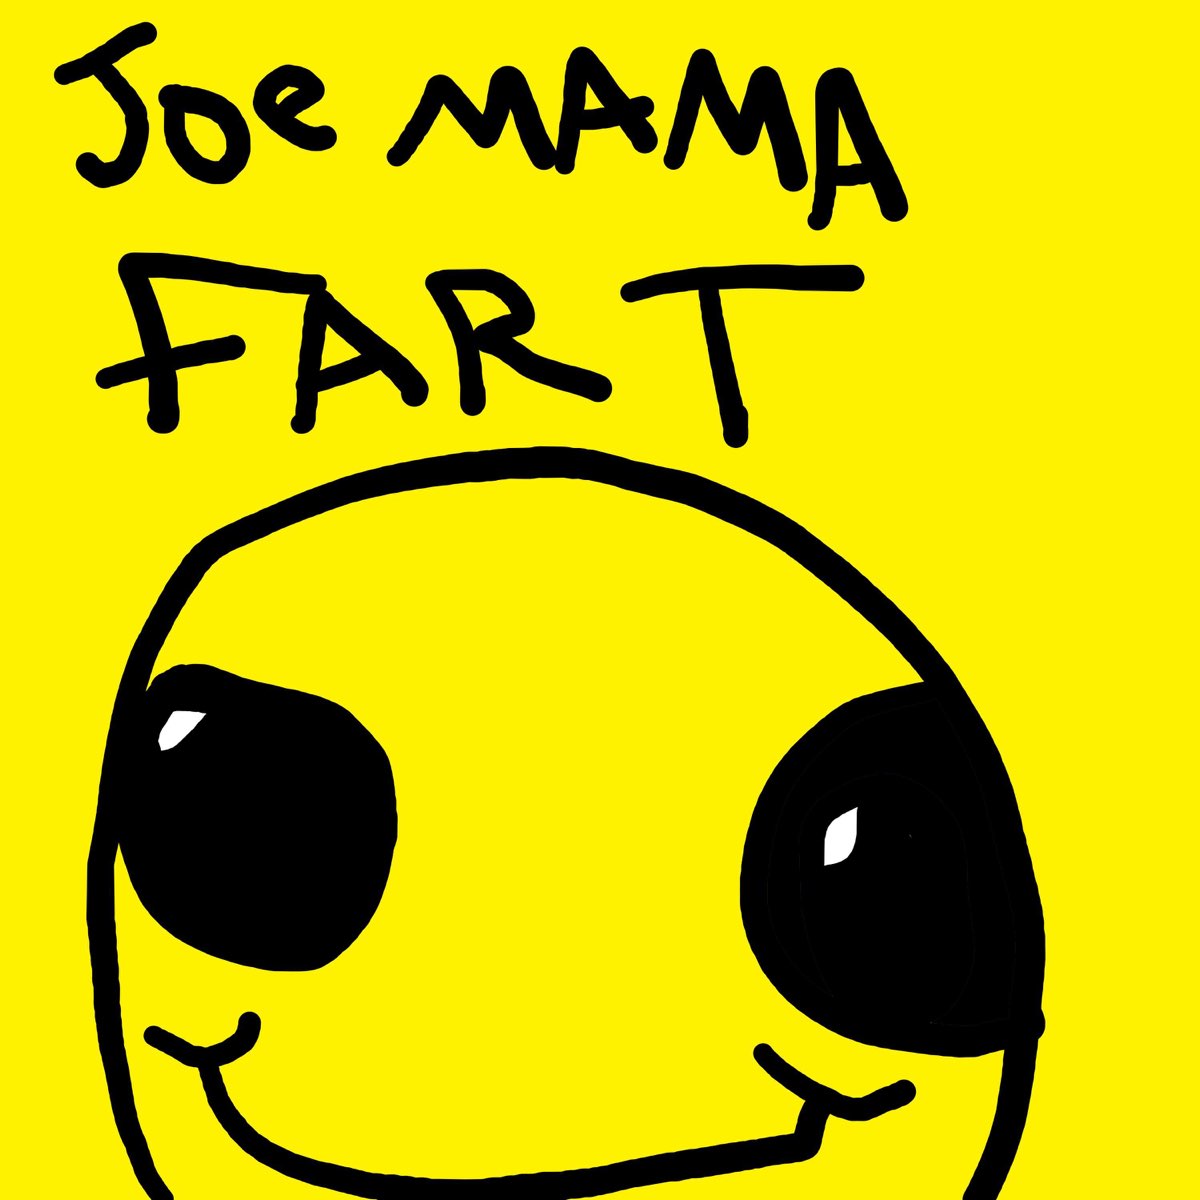 Joe Mama Fart - Single - Album by Lil Big Stack - Apple Music